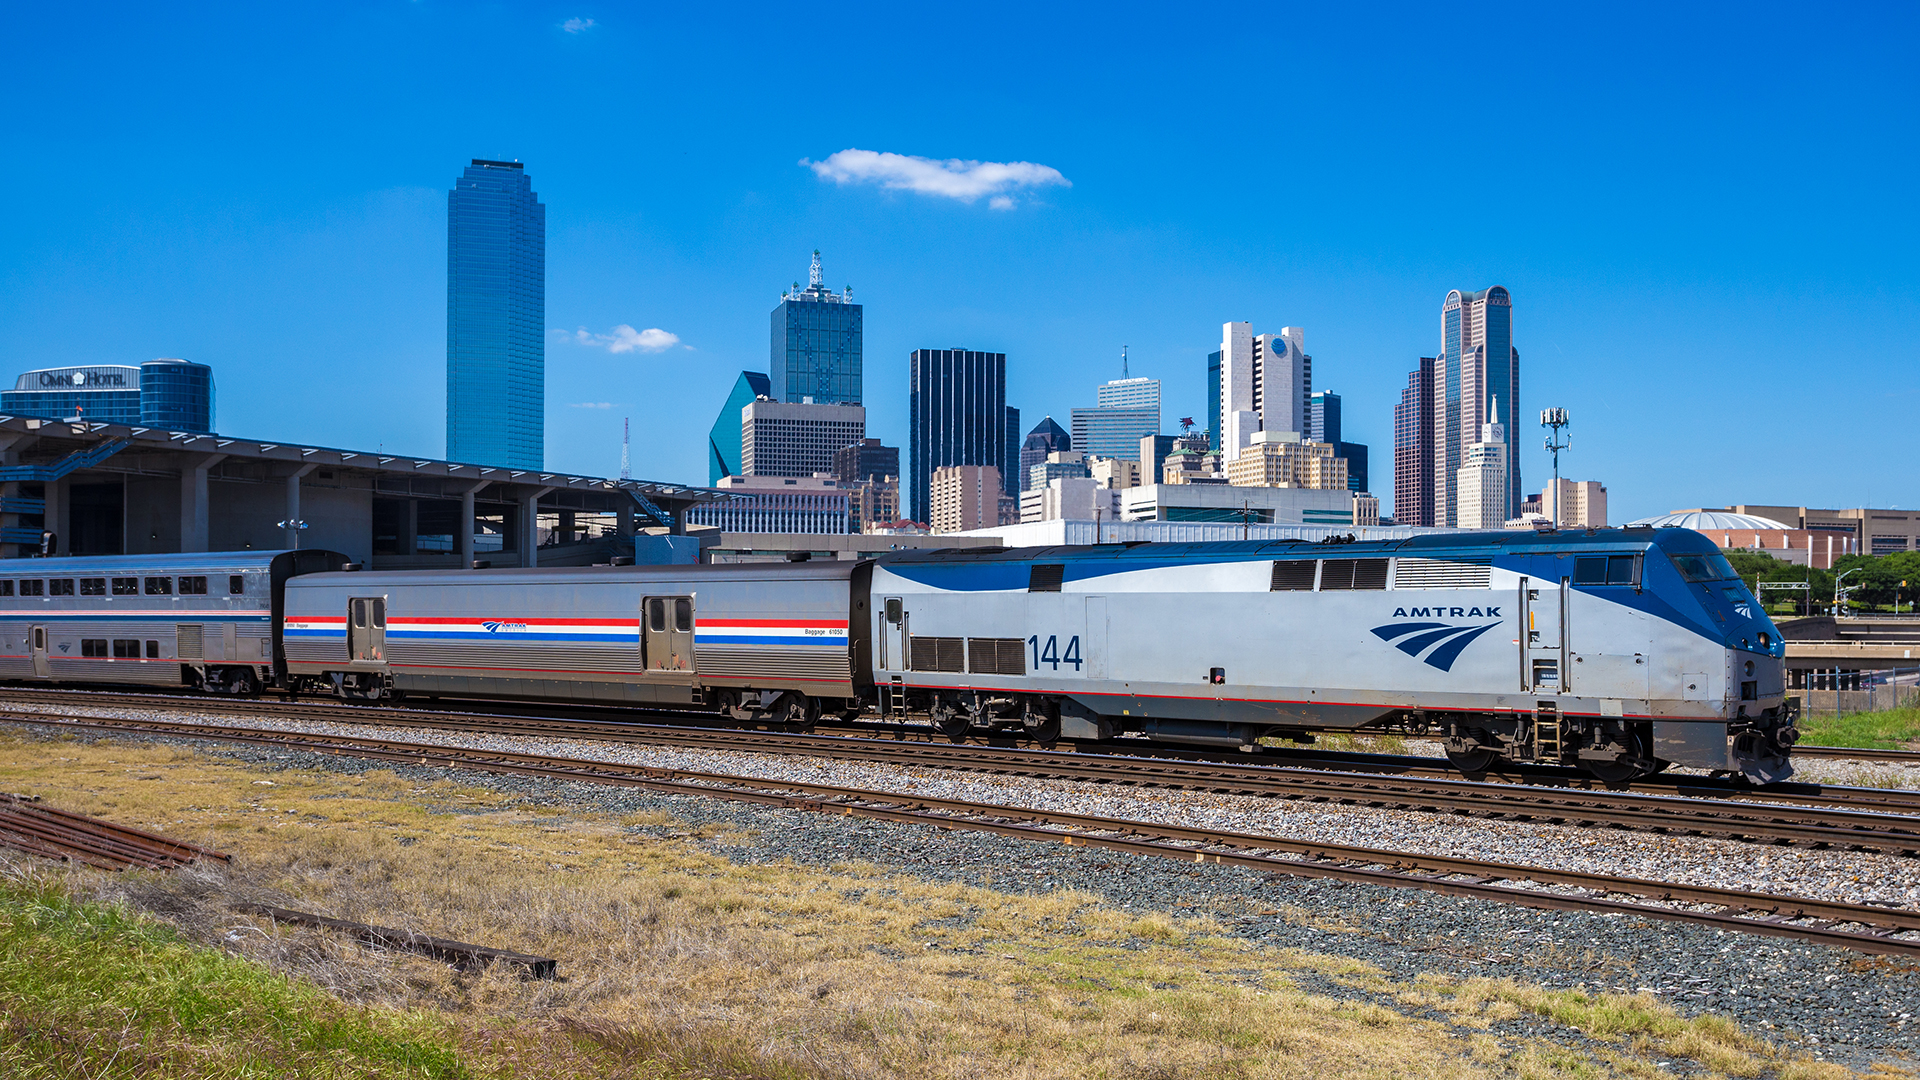 Amtrak’s eastbound Texas Eagle train departs Dallas.